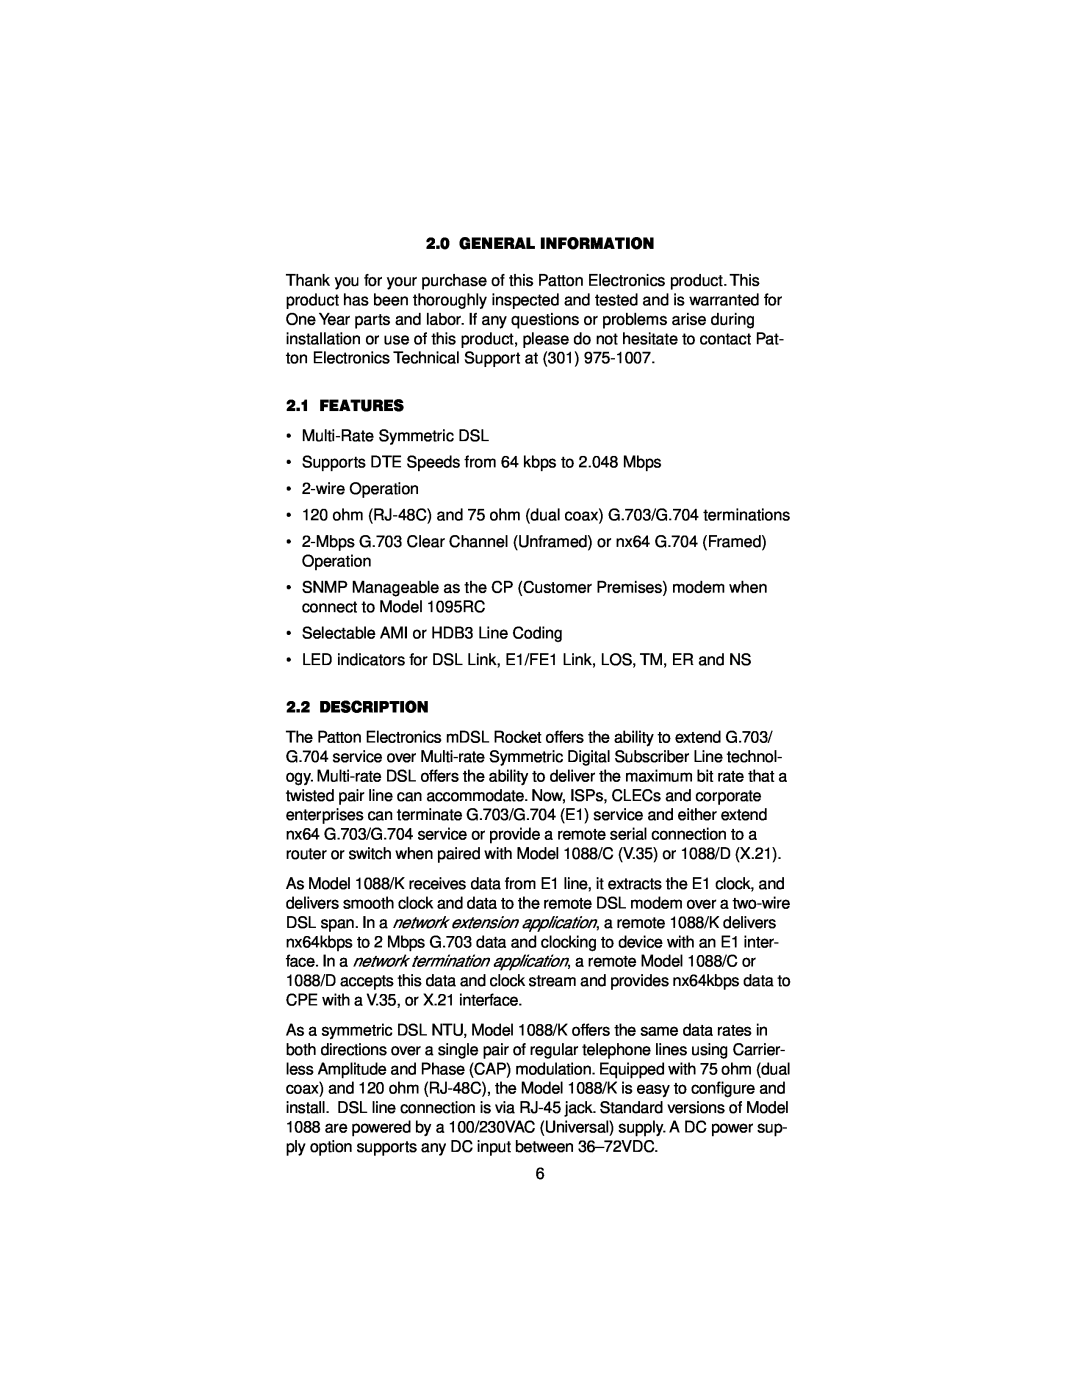 Patton electronic 1088/K user manual General Information, Features, Description 